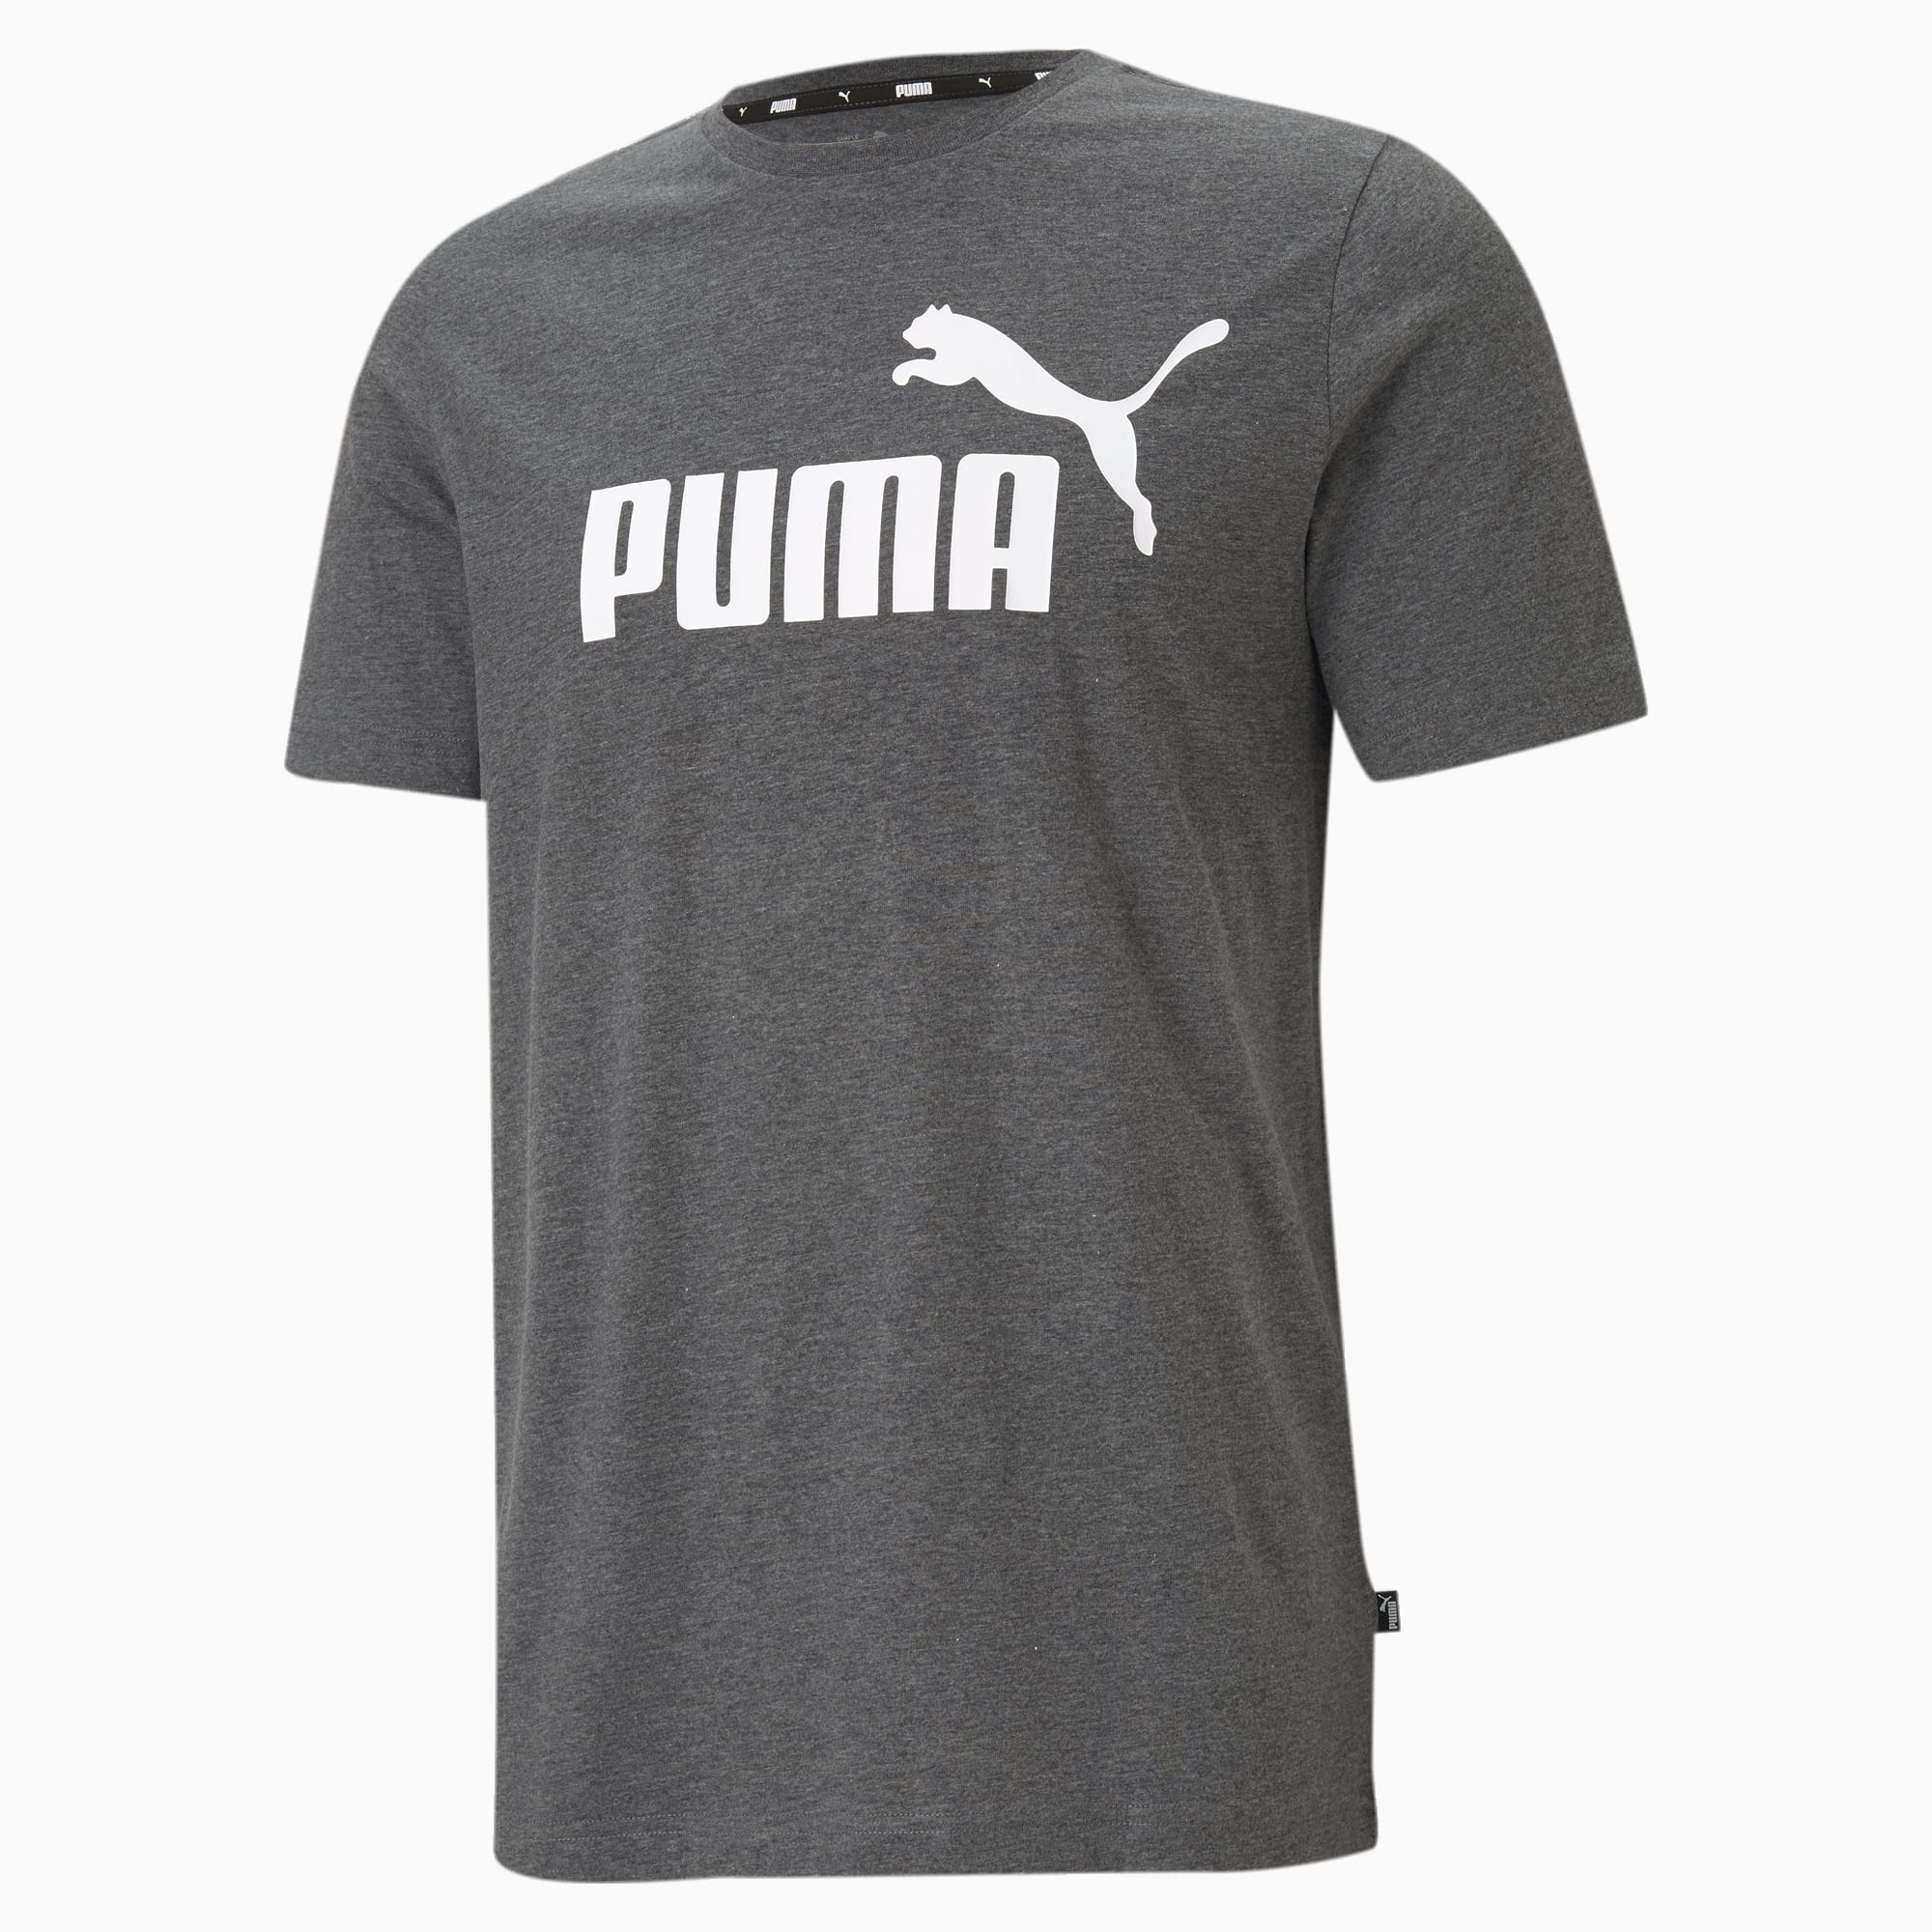 PUMA Essentials Heather Men's T-Shirt, Black, Size L, Clothing